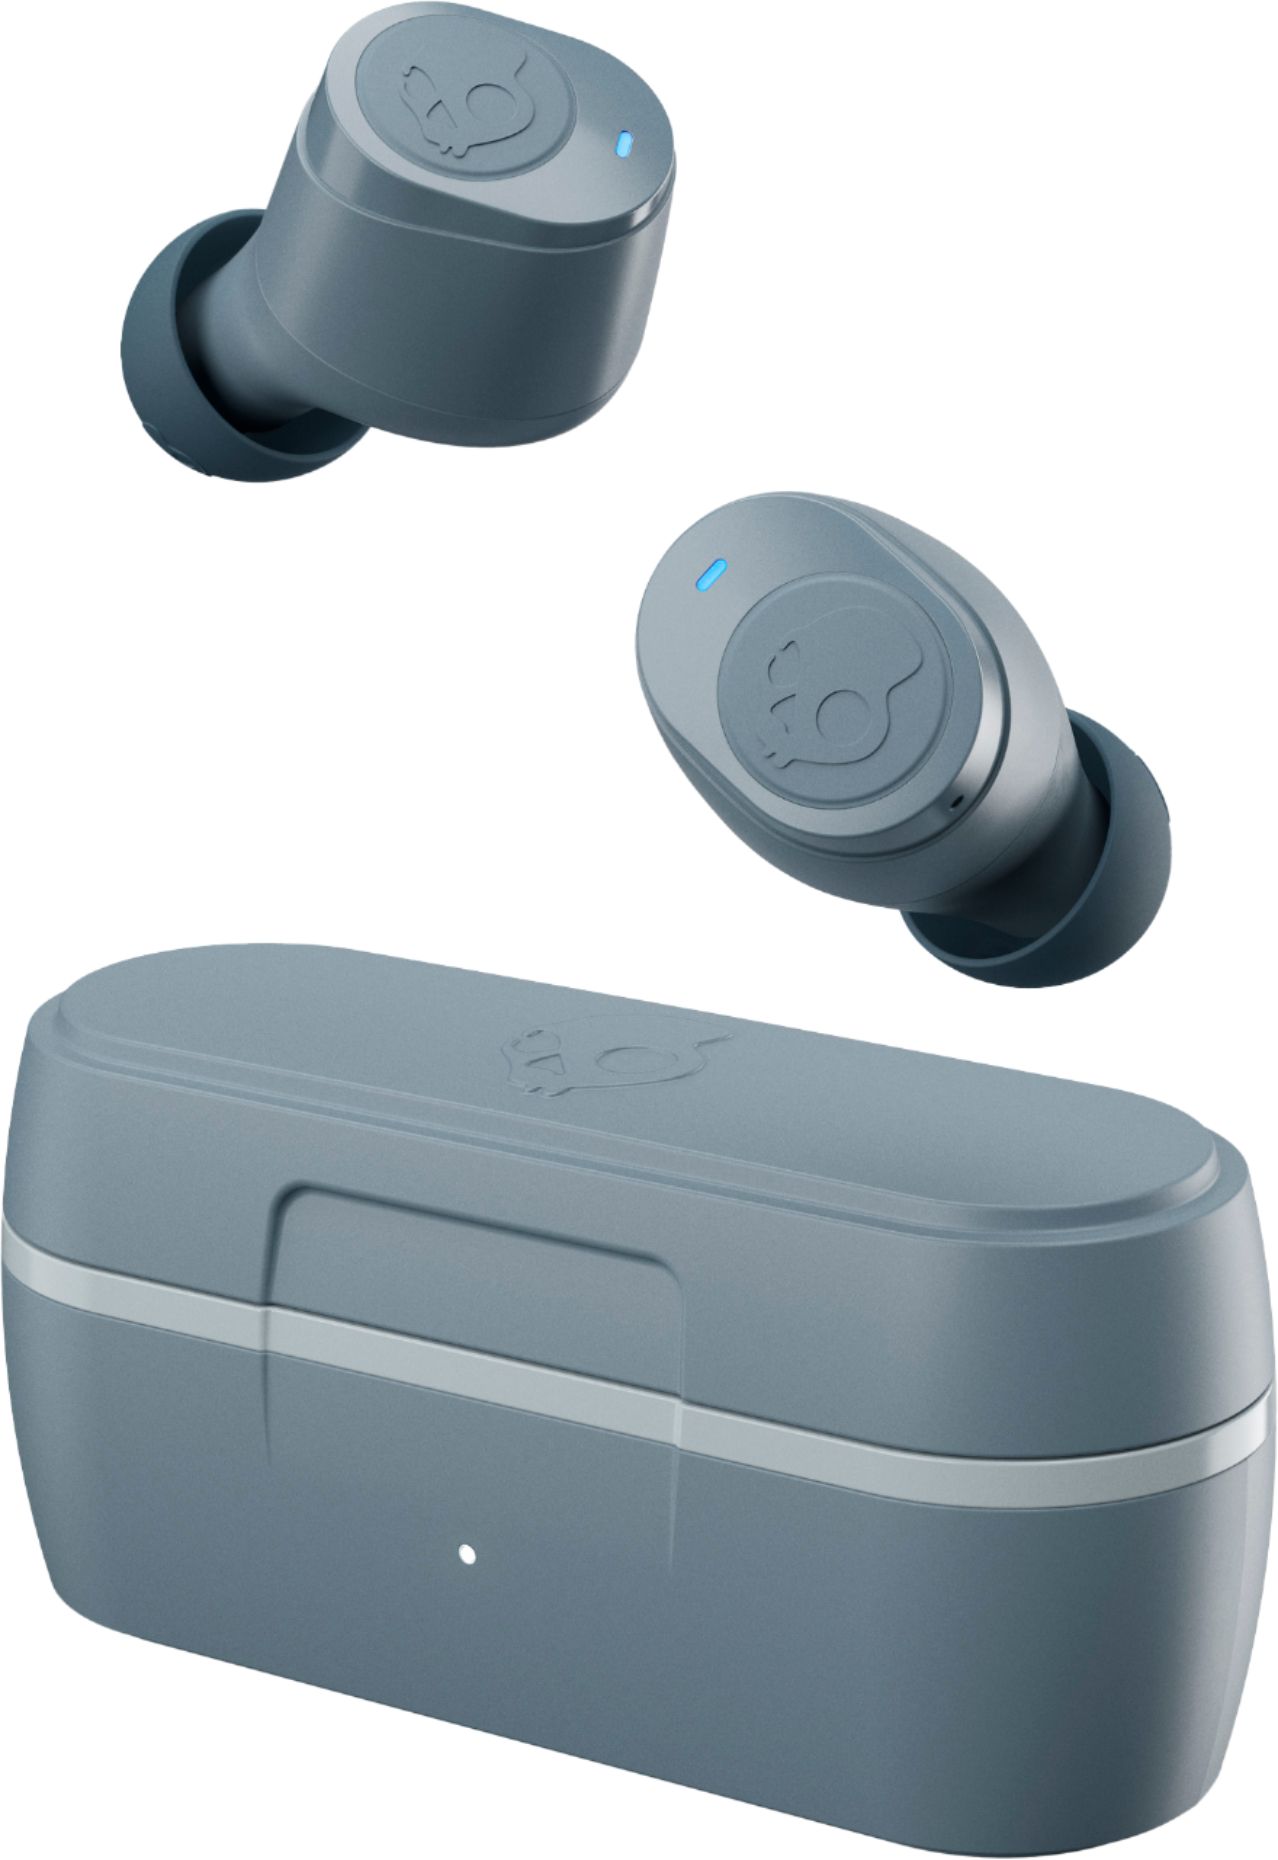 Angle View: Skullcandy - Jib True Wireless In-Ear Headphones - Chill Grey